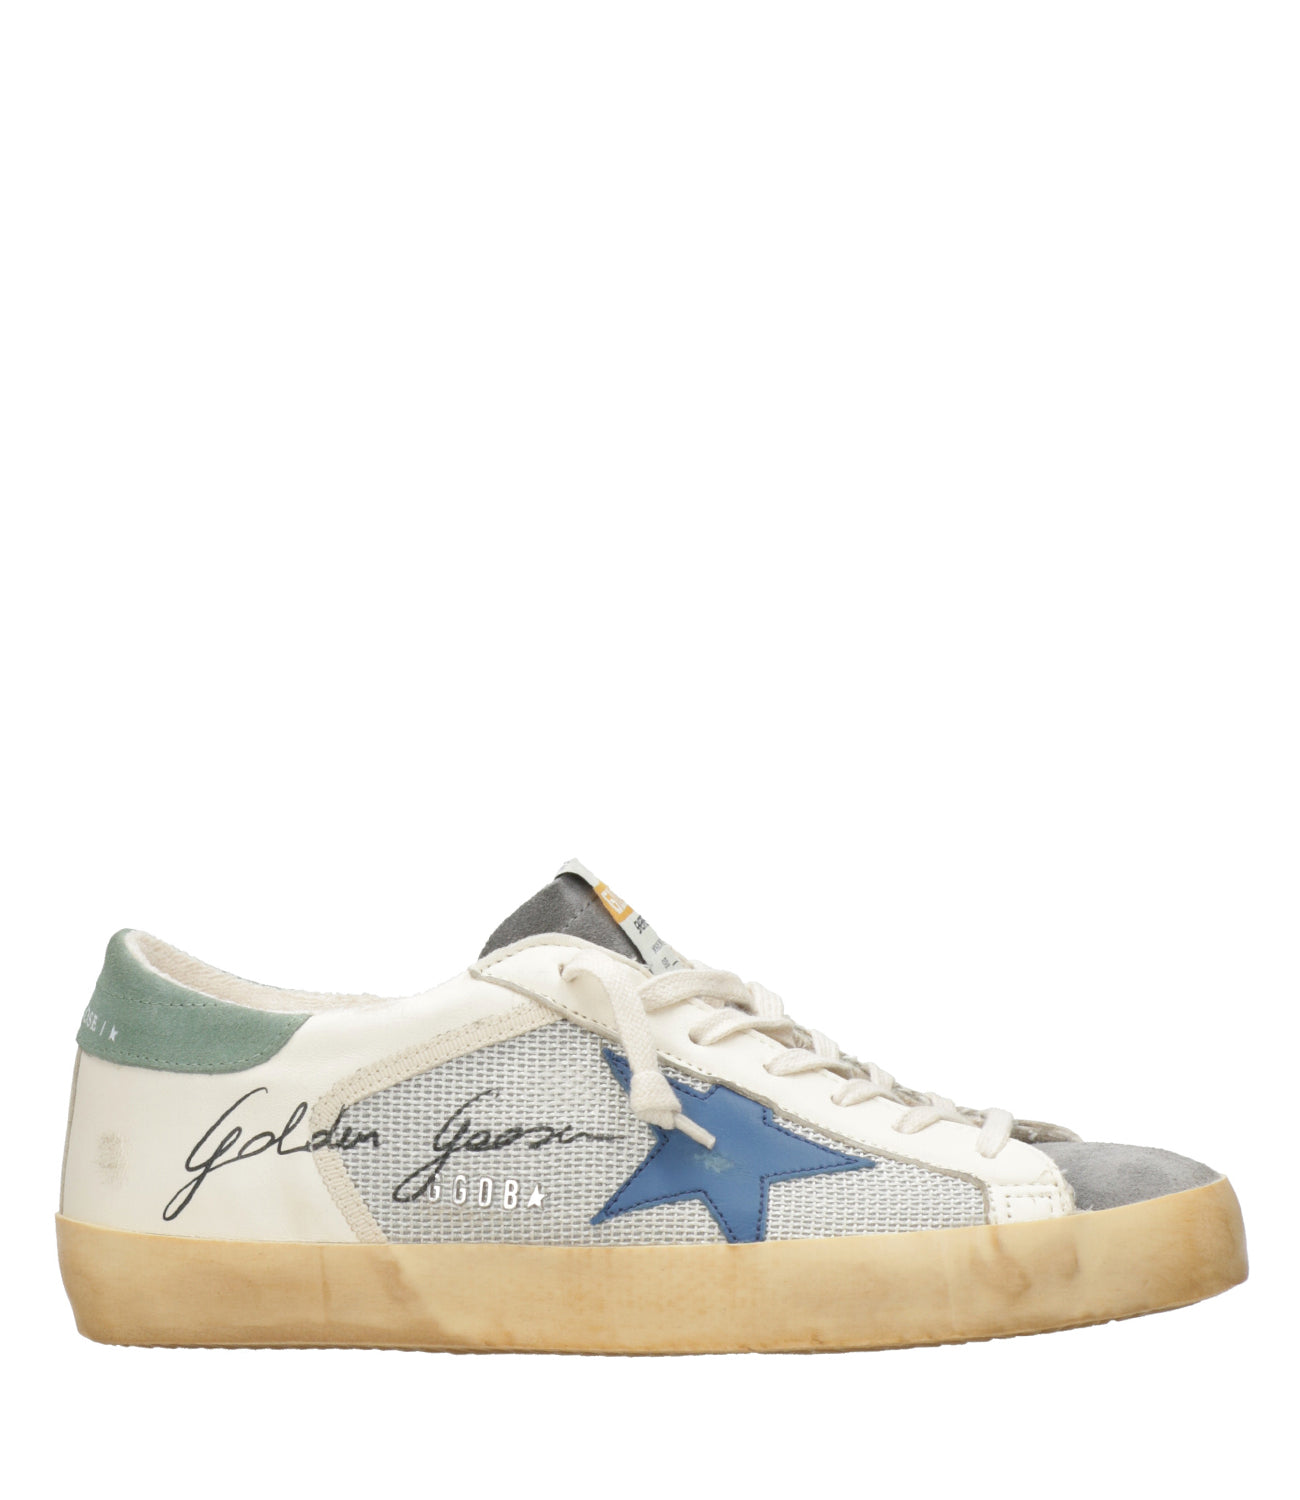 Golden Goose | Sneakers Superstar Gricio, Bianco e Blu